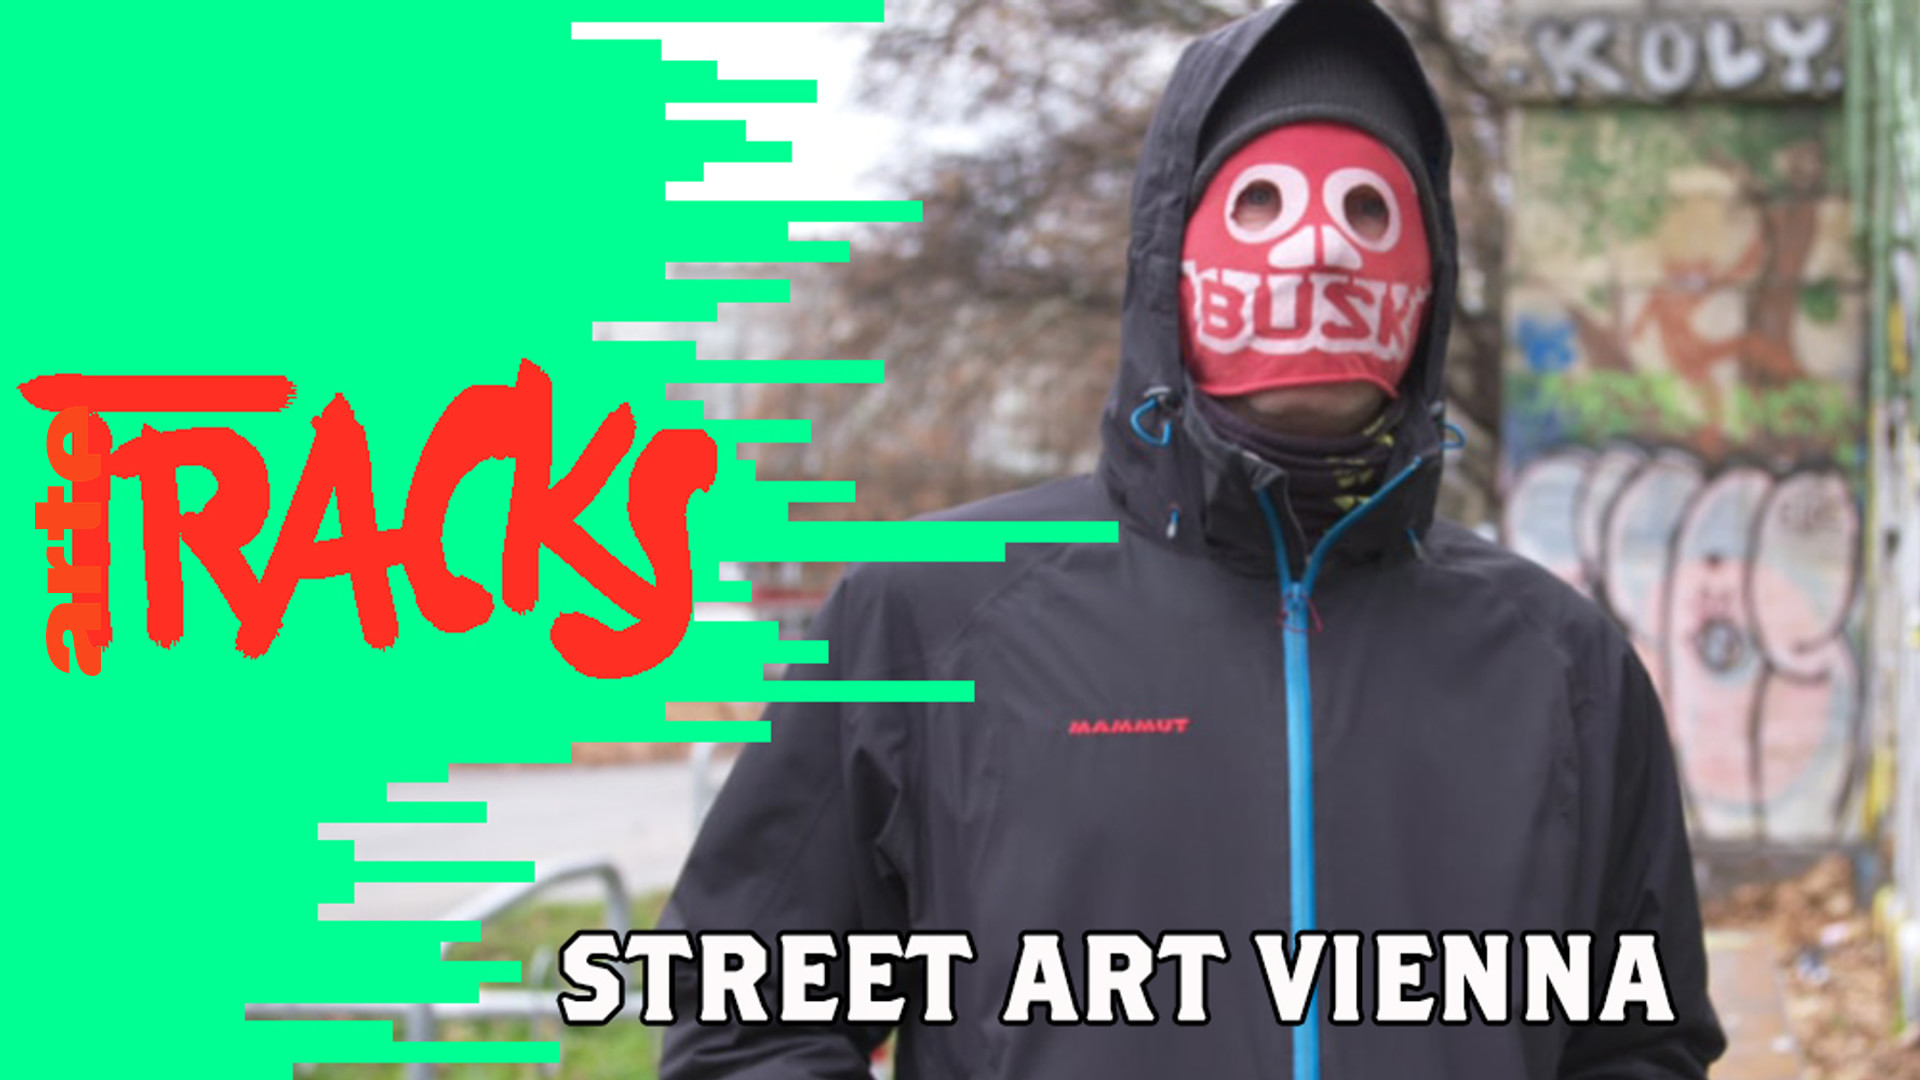 Street Art Vienna | TRACKS